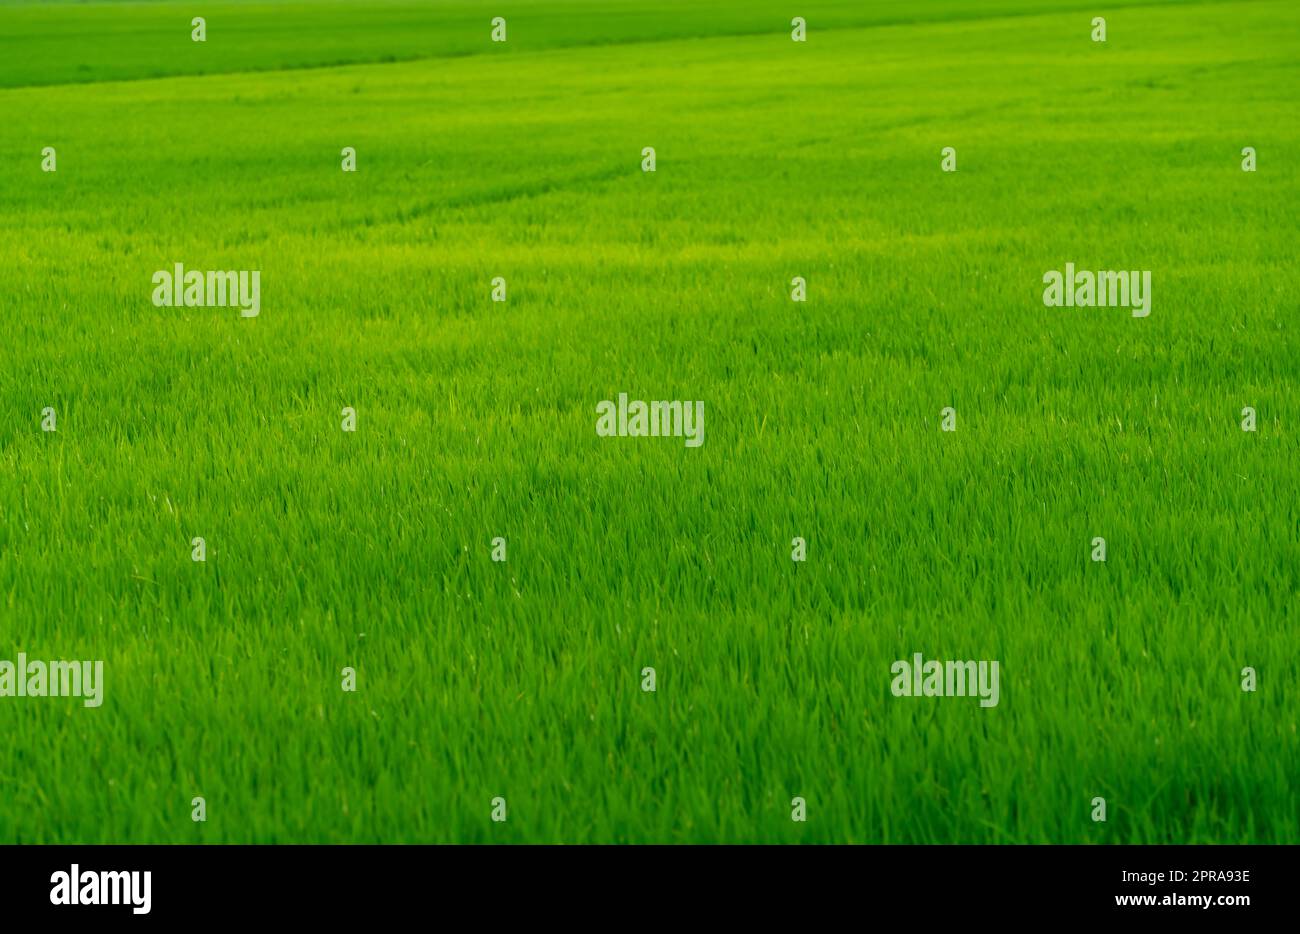 Rice plantation. Green rice paddy field. Organic rice farm. Rice growing agriculture. Green paddy field. Fullframe of green grass  in agriculture field. Farm land. Land plot. Asian staple food. Stock Photo